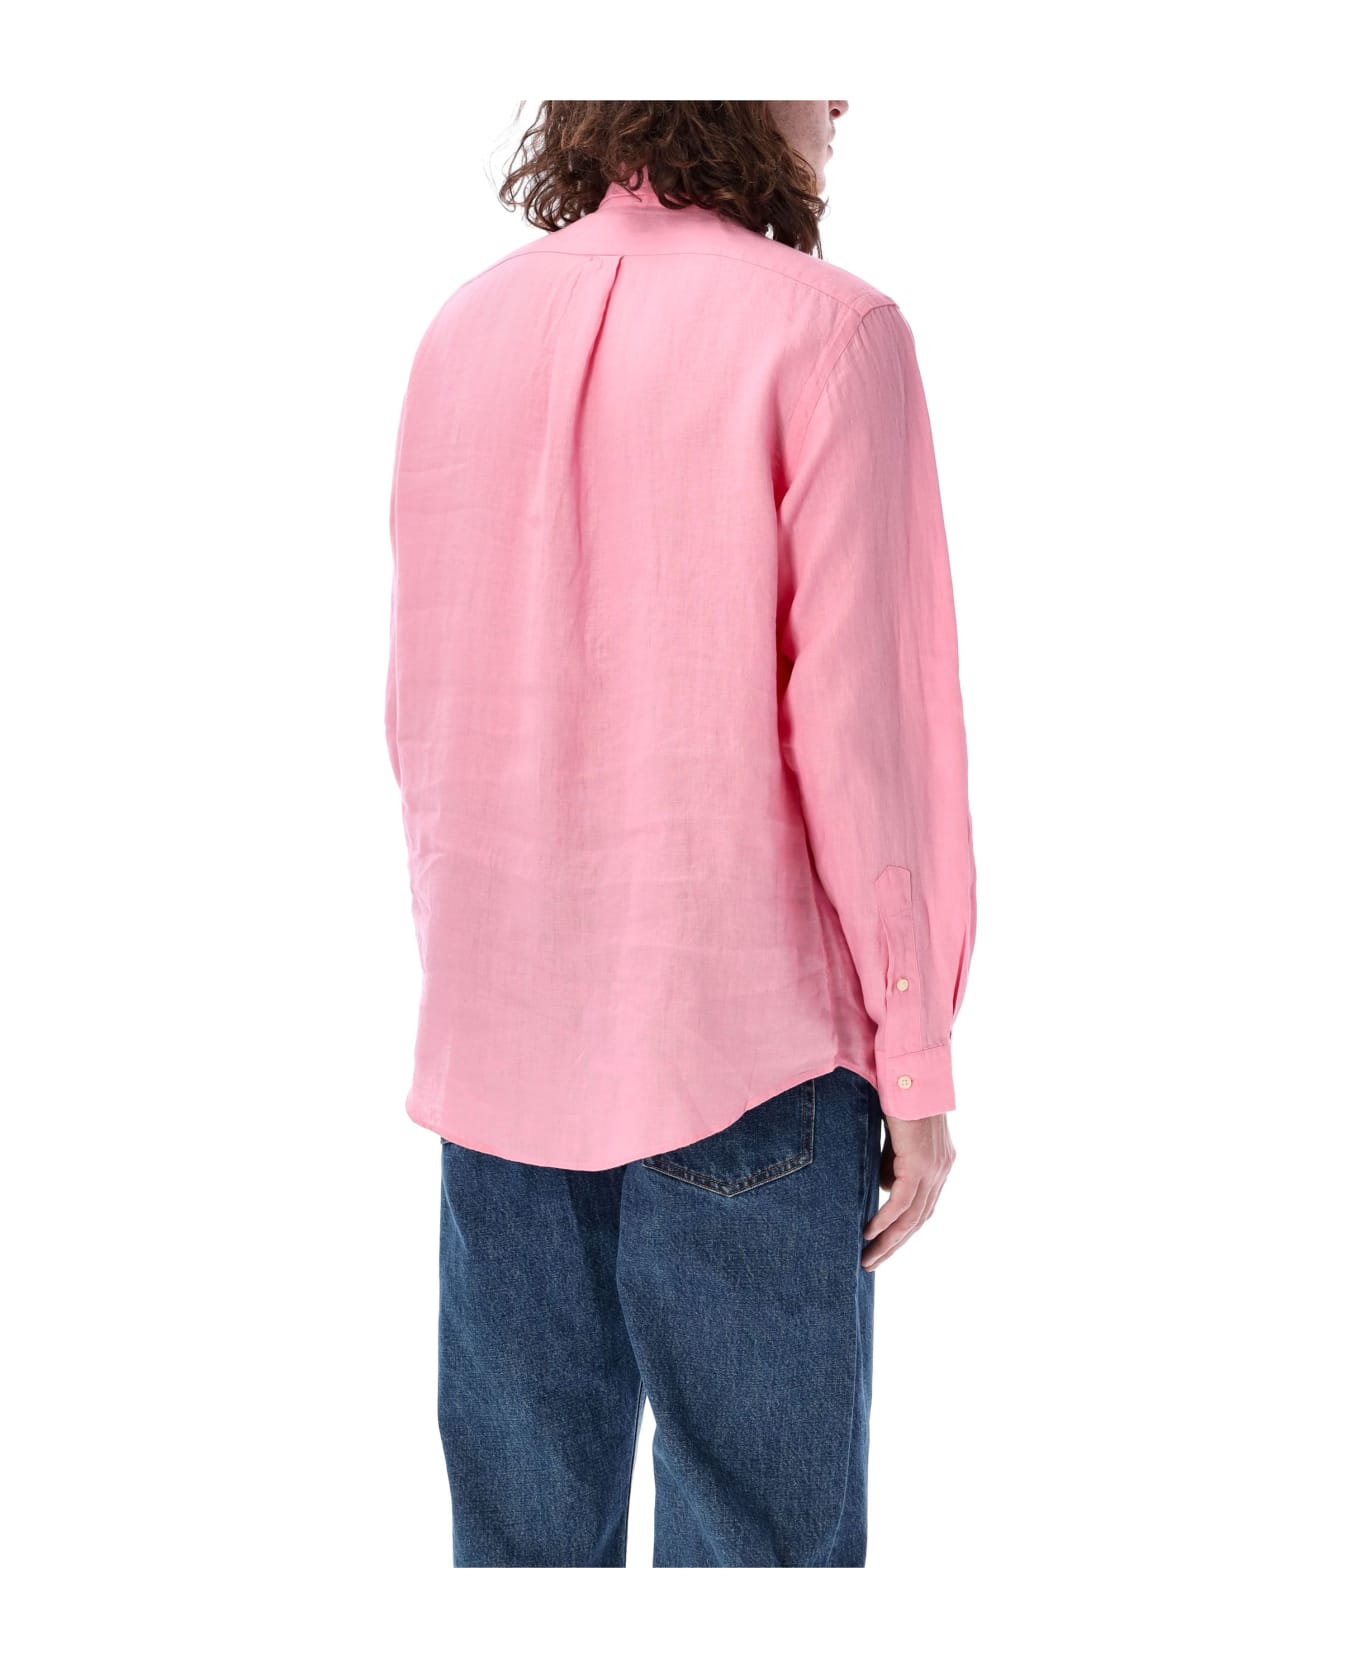 Ralph Lauren Custom Fit Shirt - Bright Pink シャツ